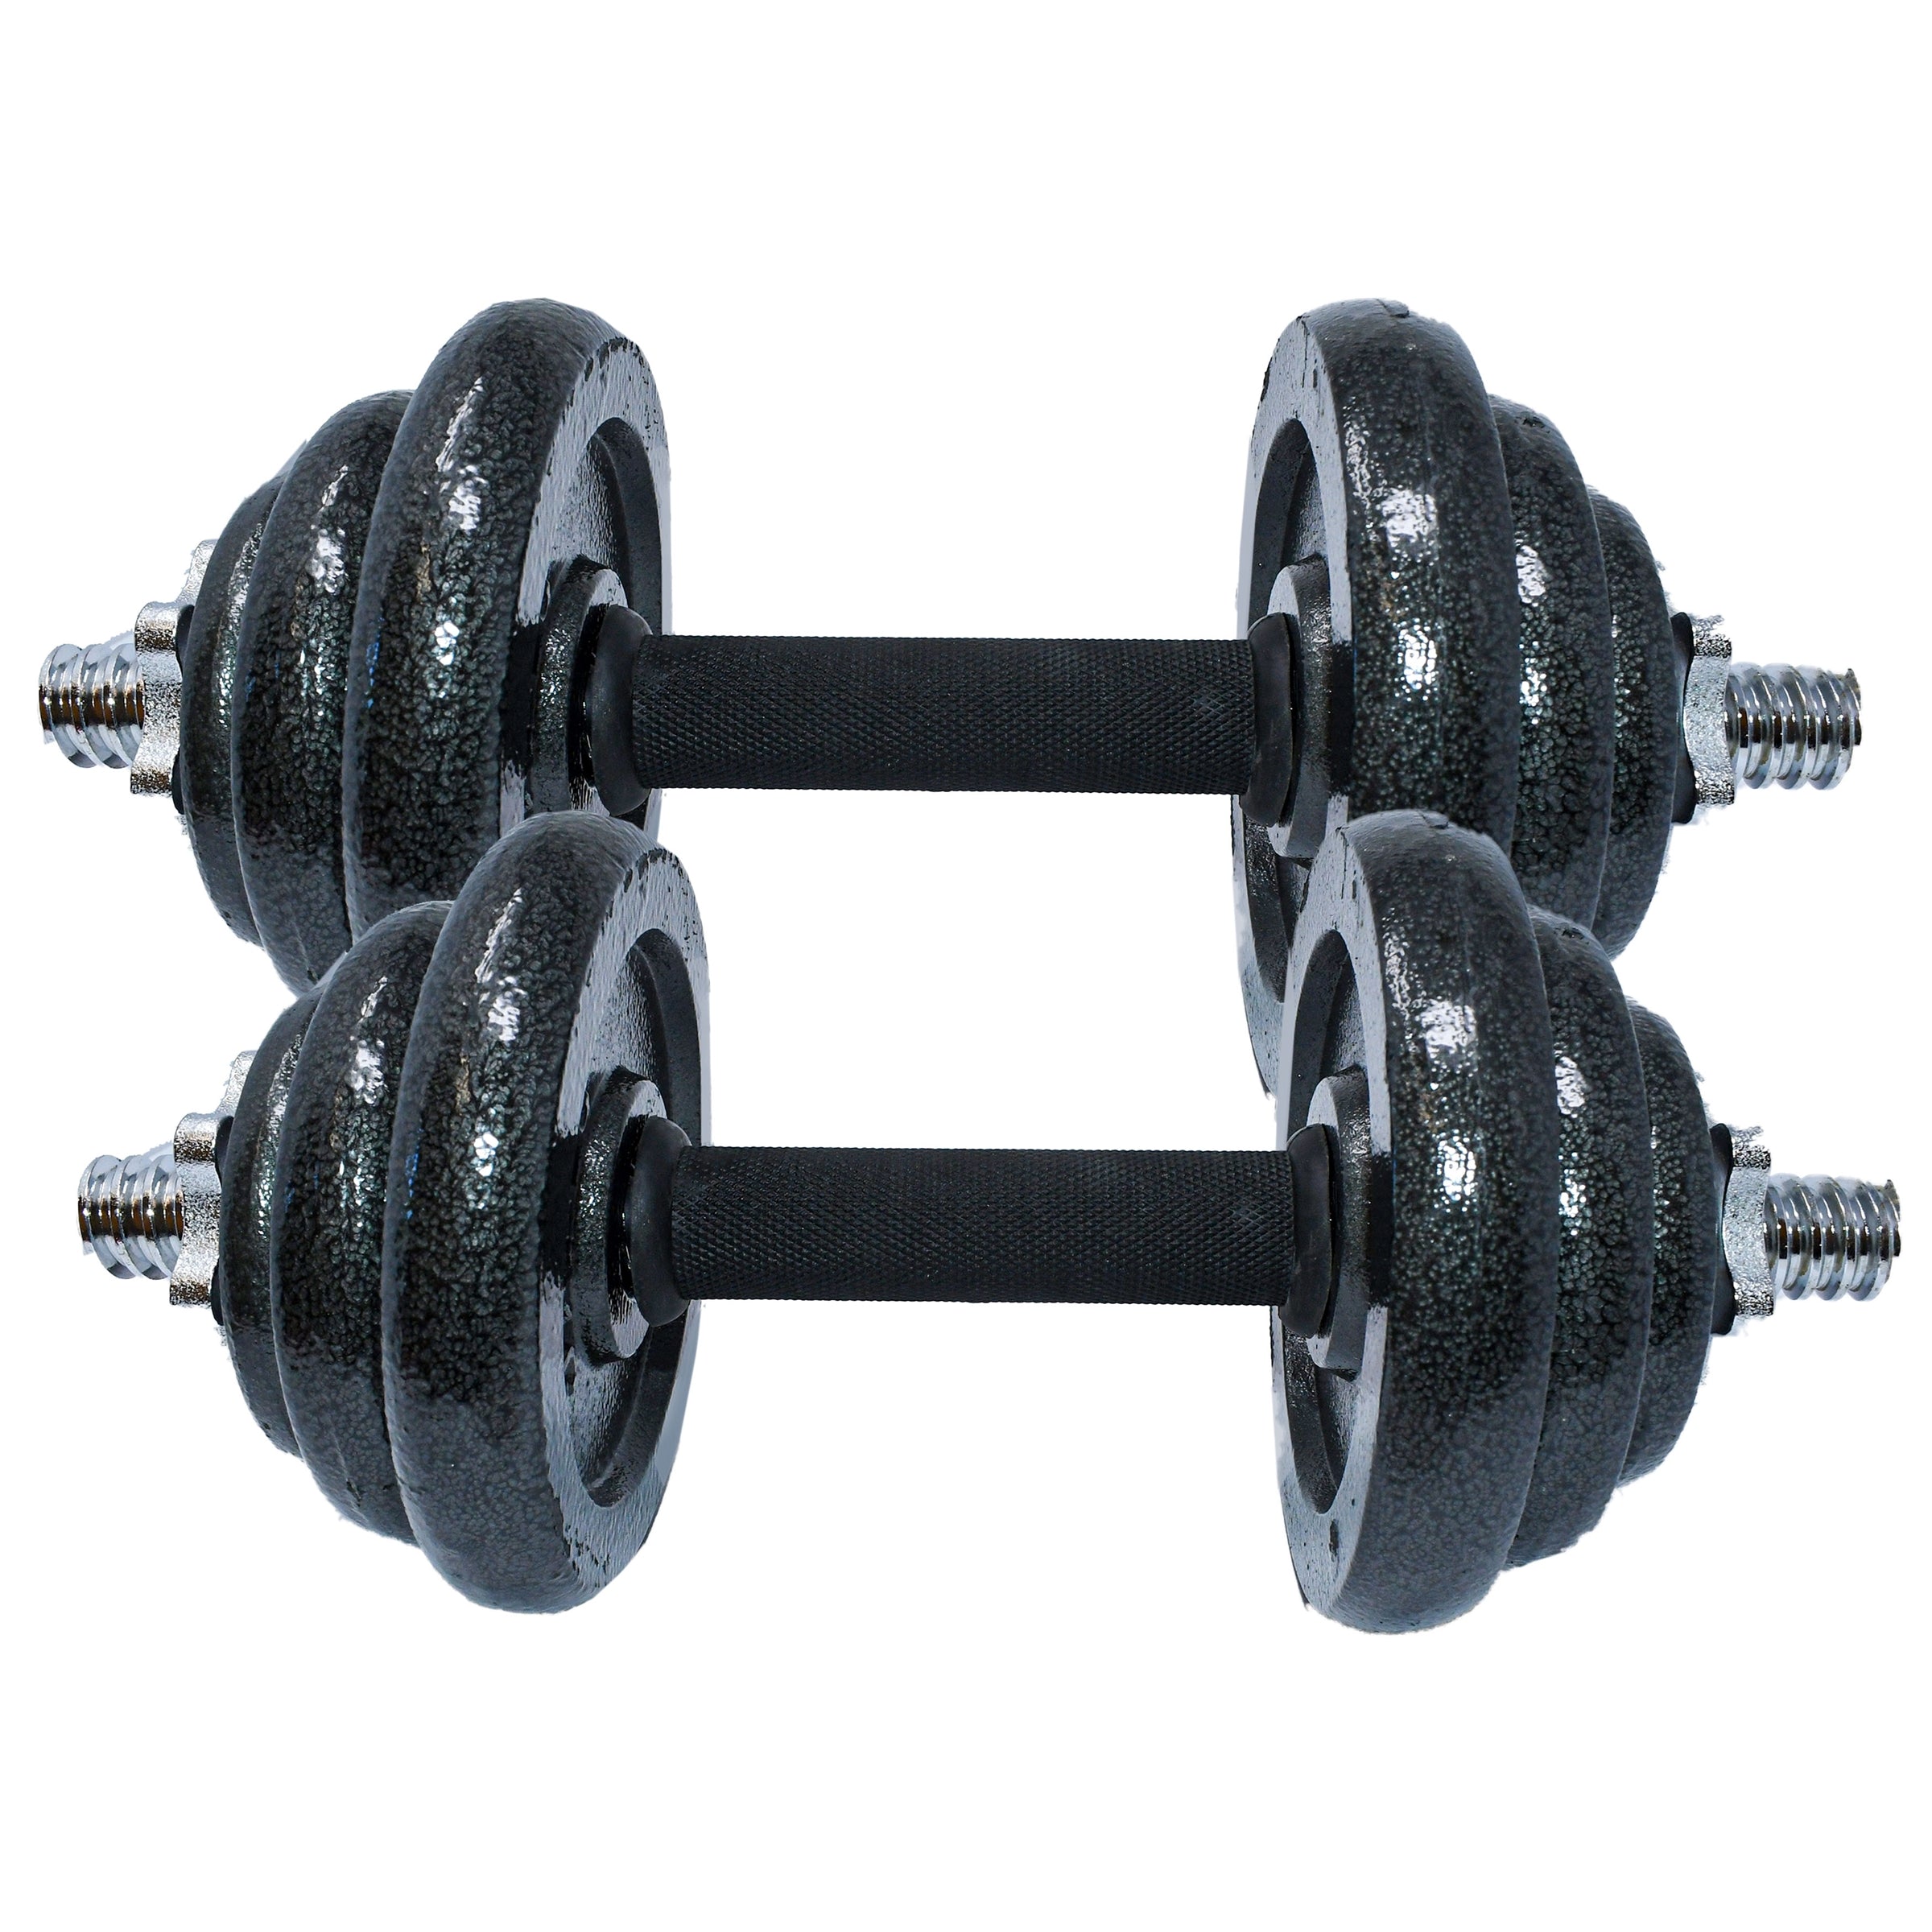 Cast Iron Adjustable Dumbbell Set for Home Gym - 44 lbs (20 kg)